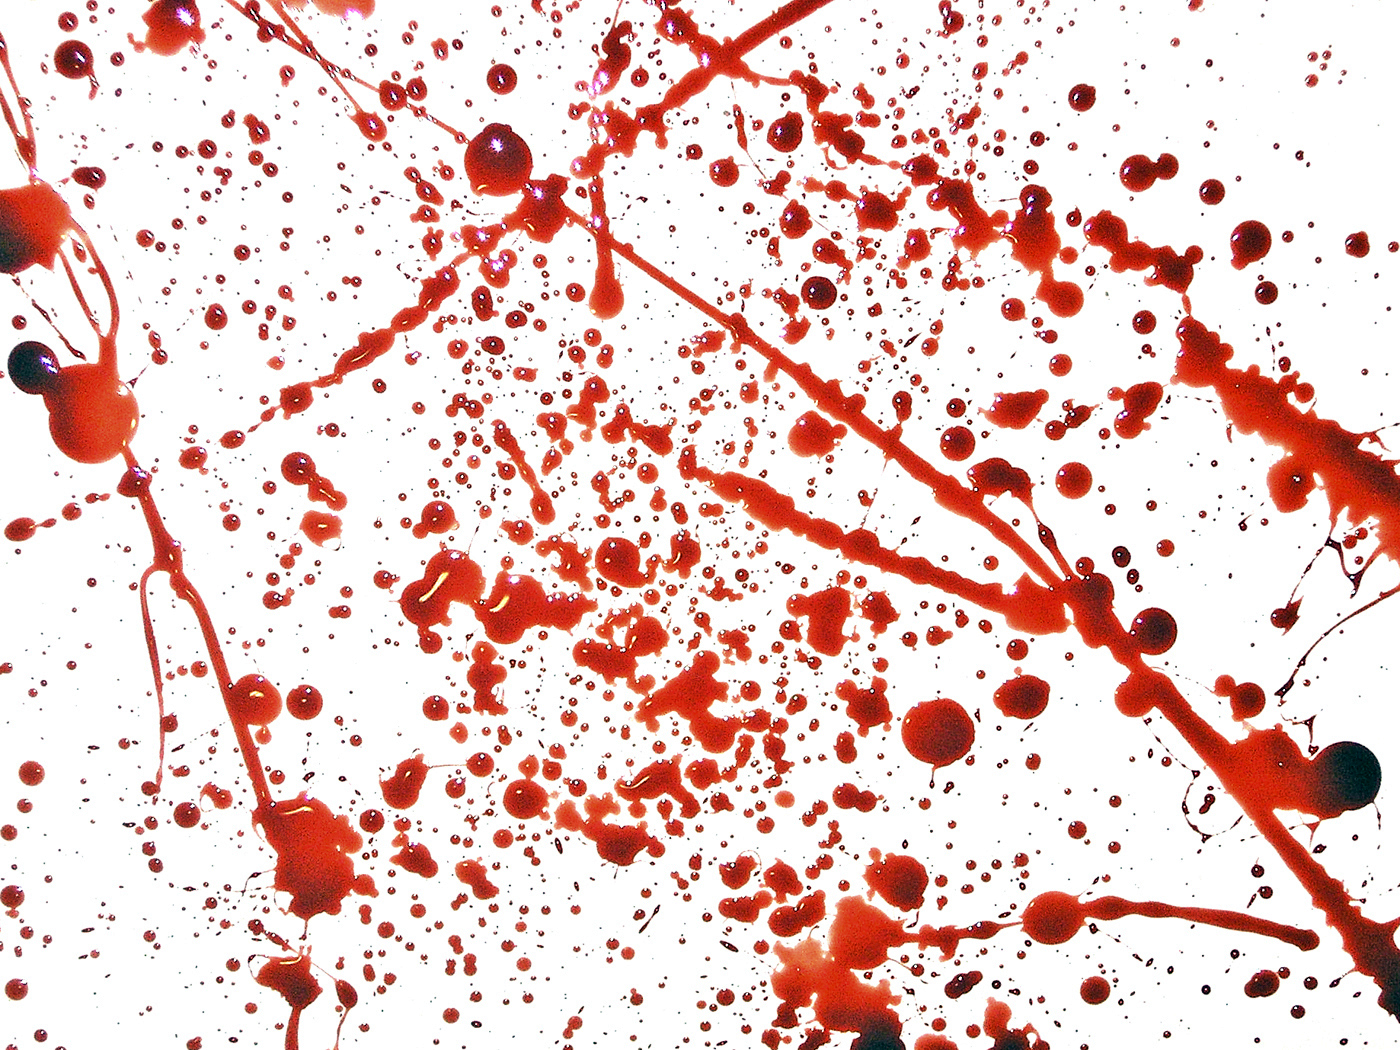 Blood Splatter By Wallpaper Picswallpaper